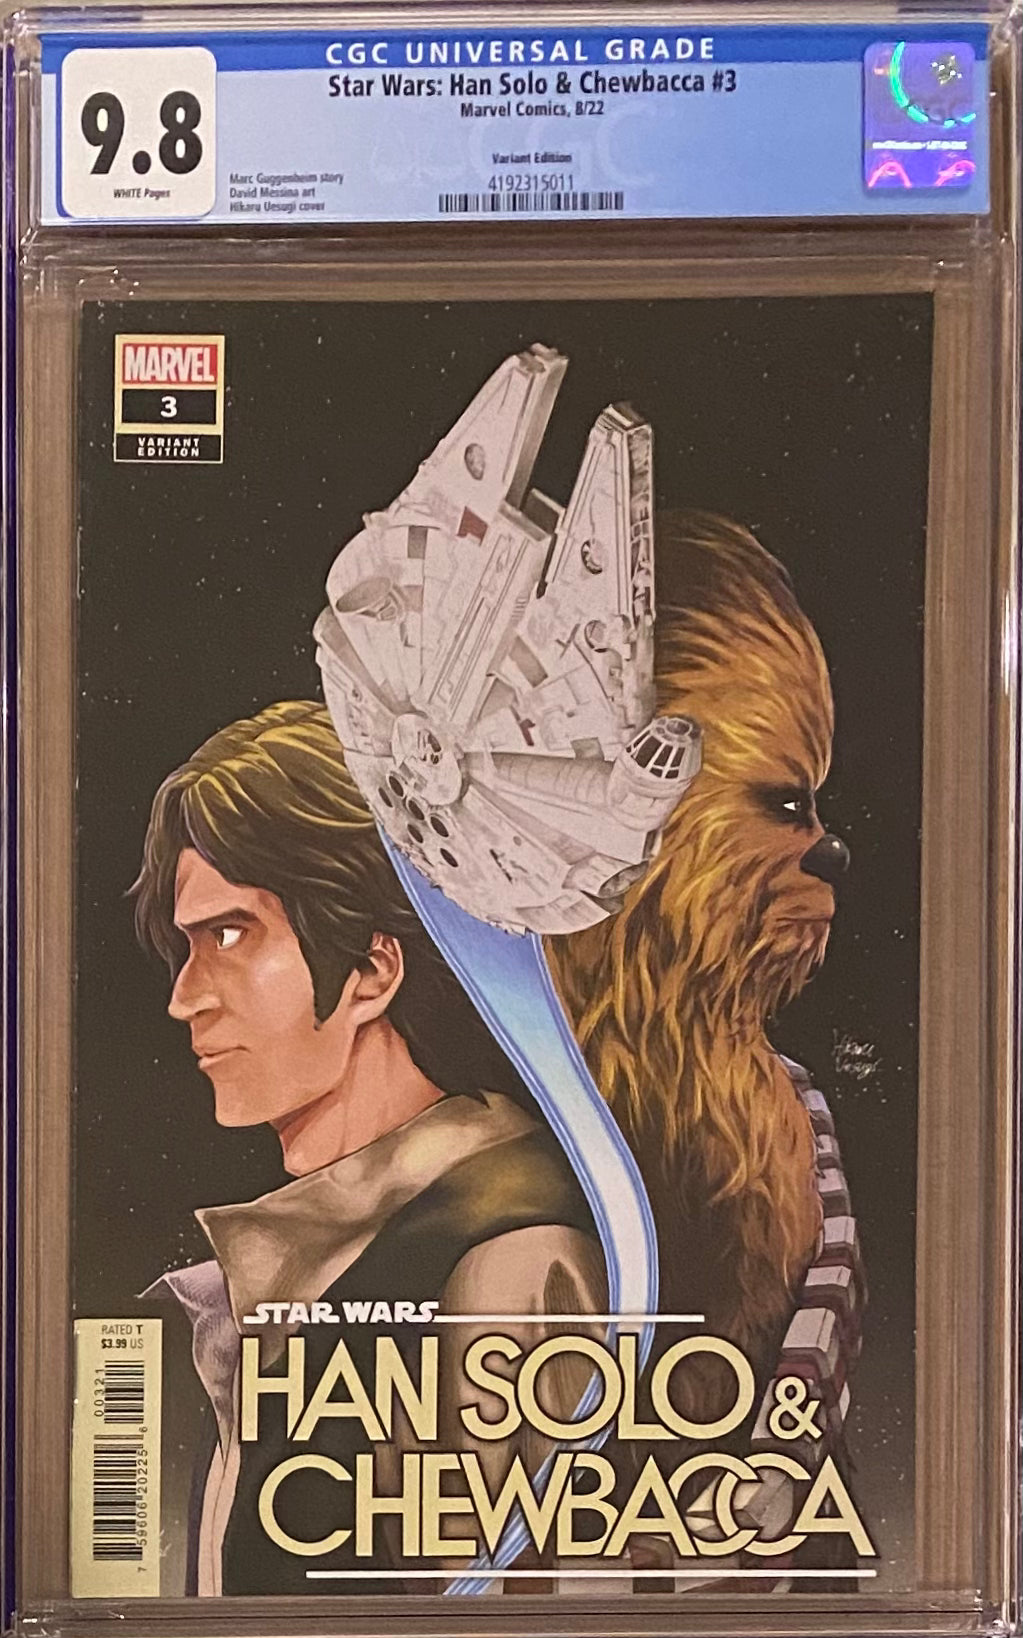 Star Wars: Han Solo & Chewbacca #3 Variant CGC 9.8